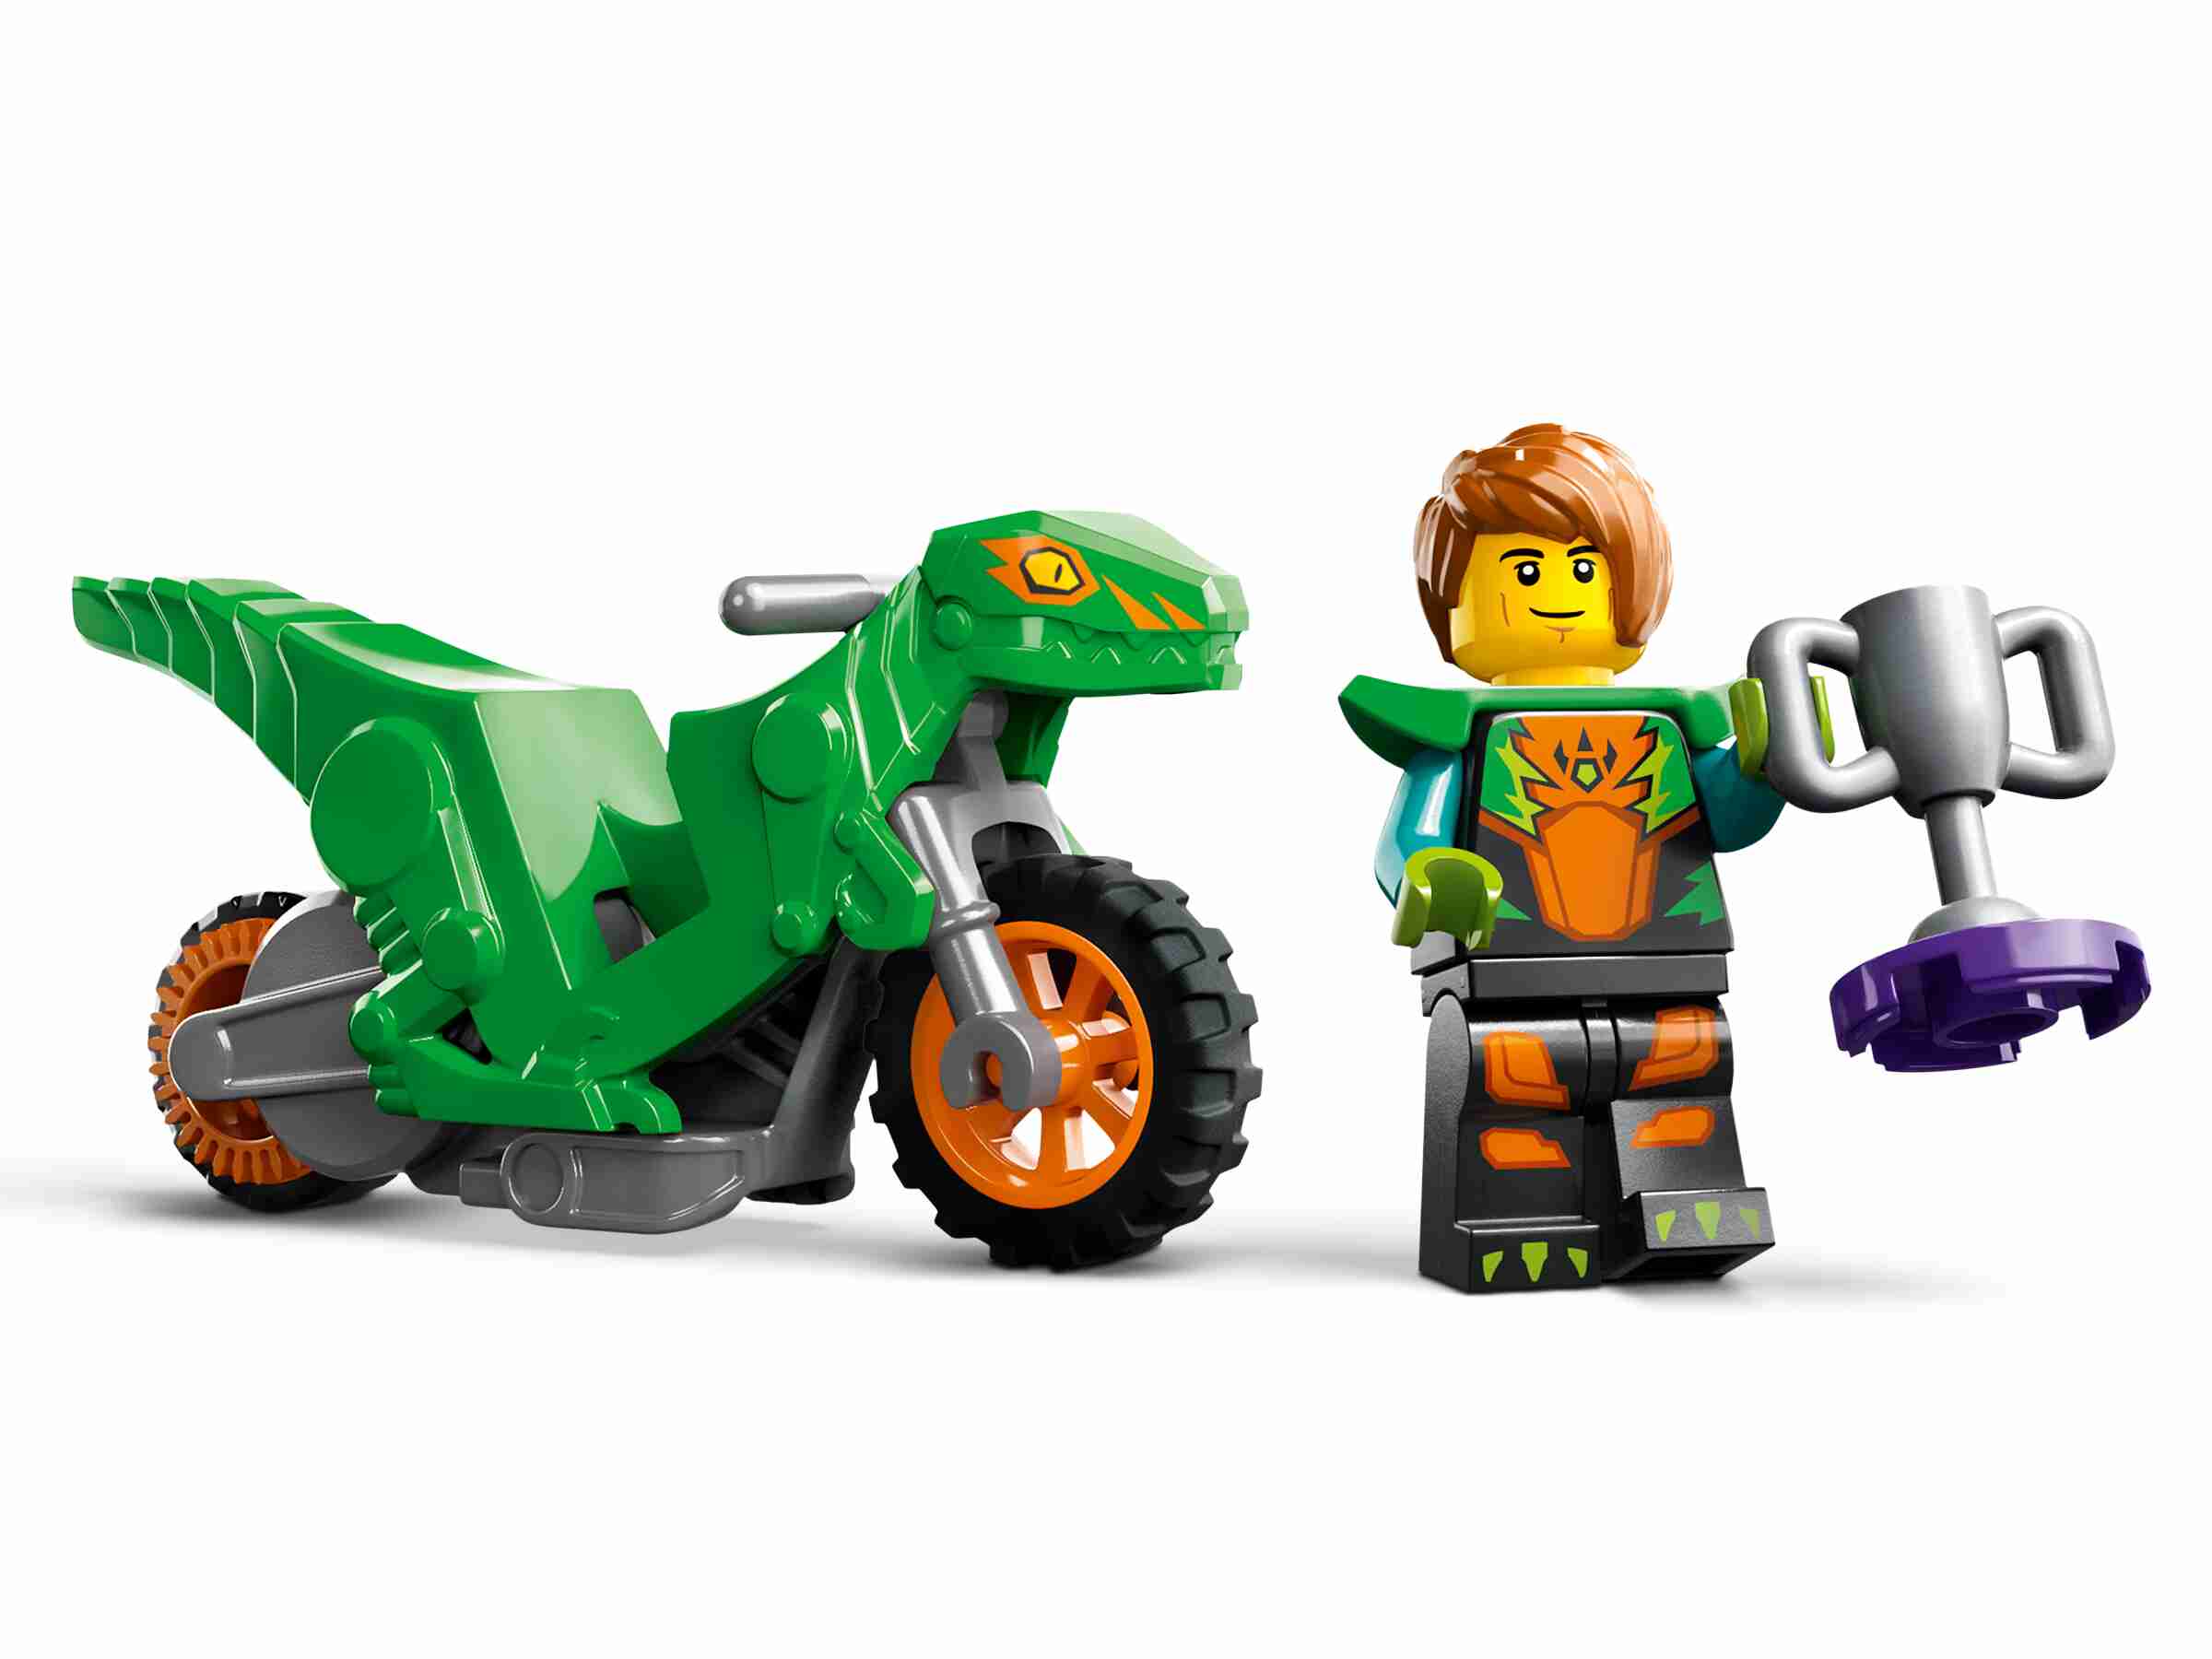 LEGO 60359 City Sturzflug-Challenge, Stuntz, Fahrer-Minifigur, Rampe